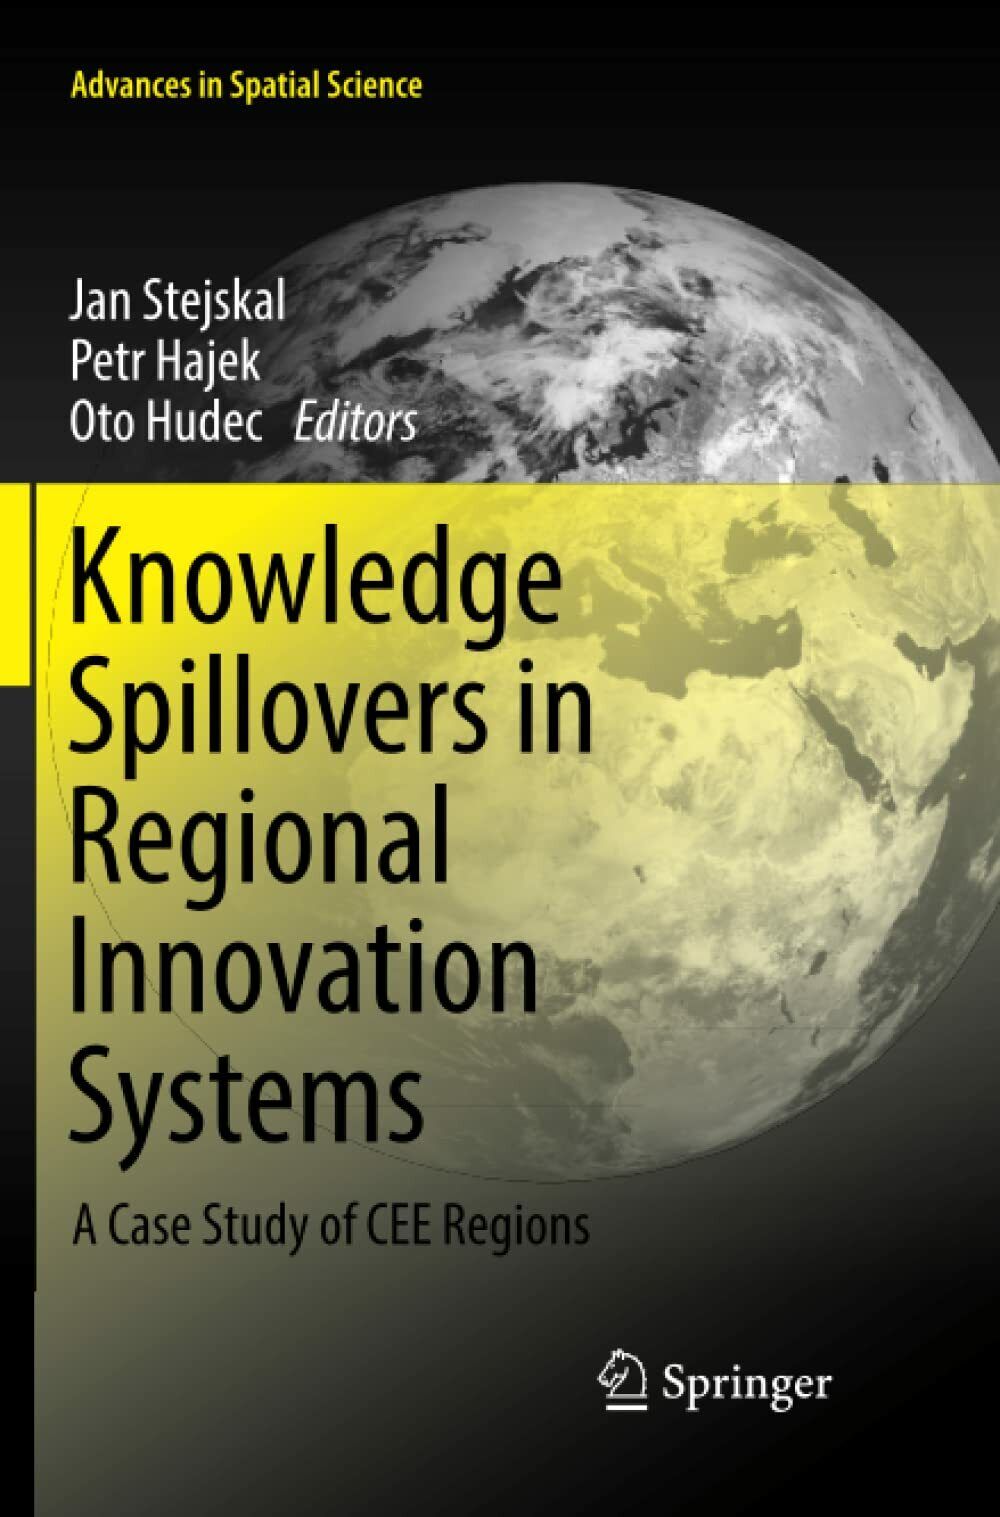 Knowledge Spillovers in Regional Innovation Systems - Jan Stejskal-Springer,2019